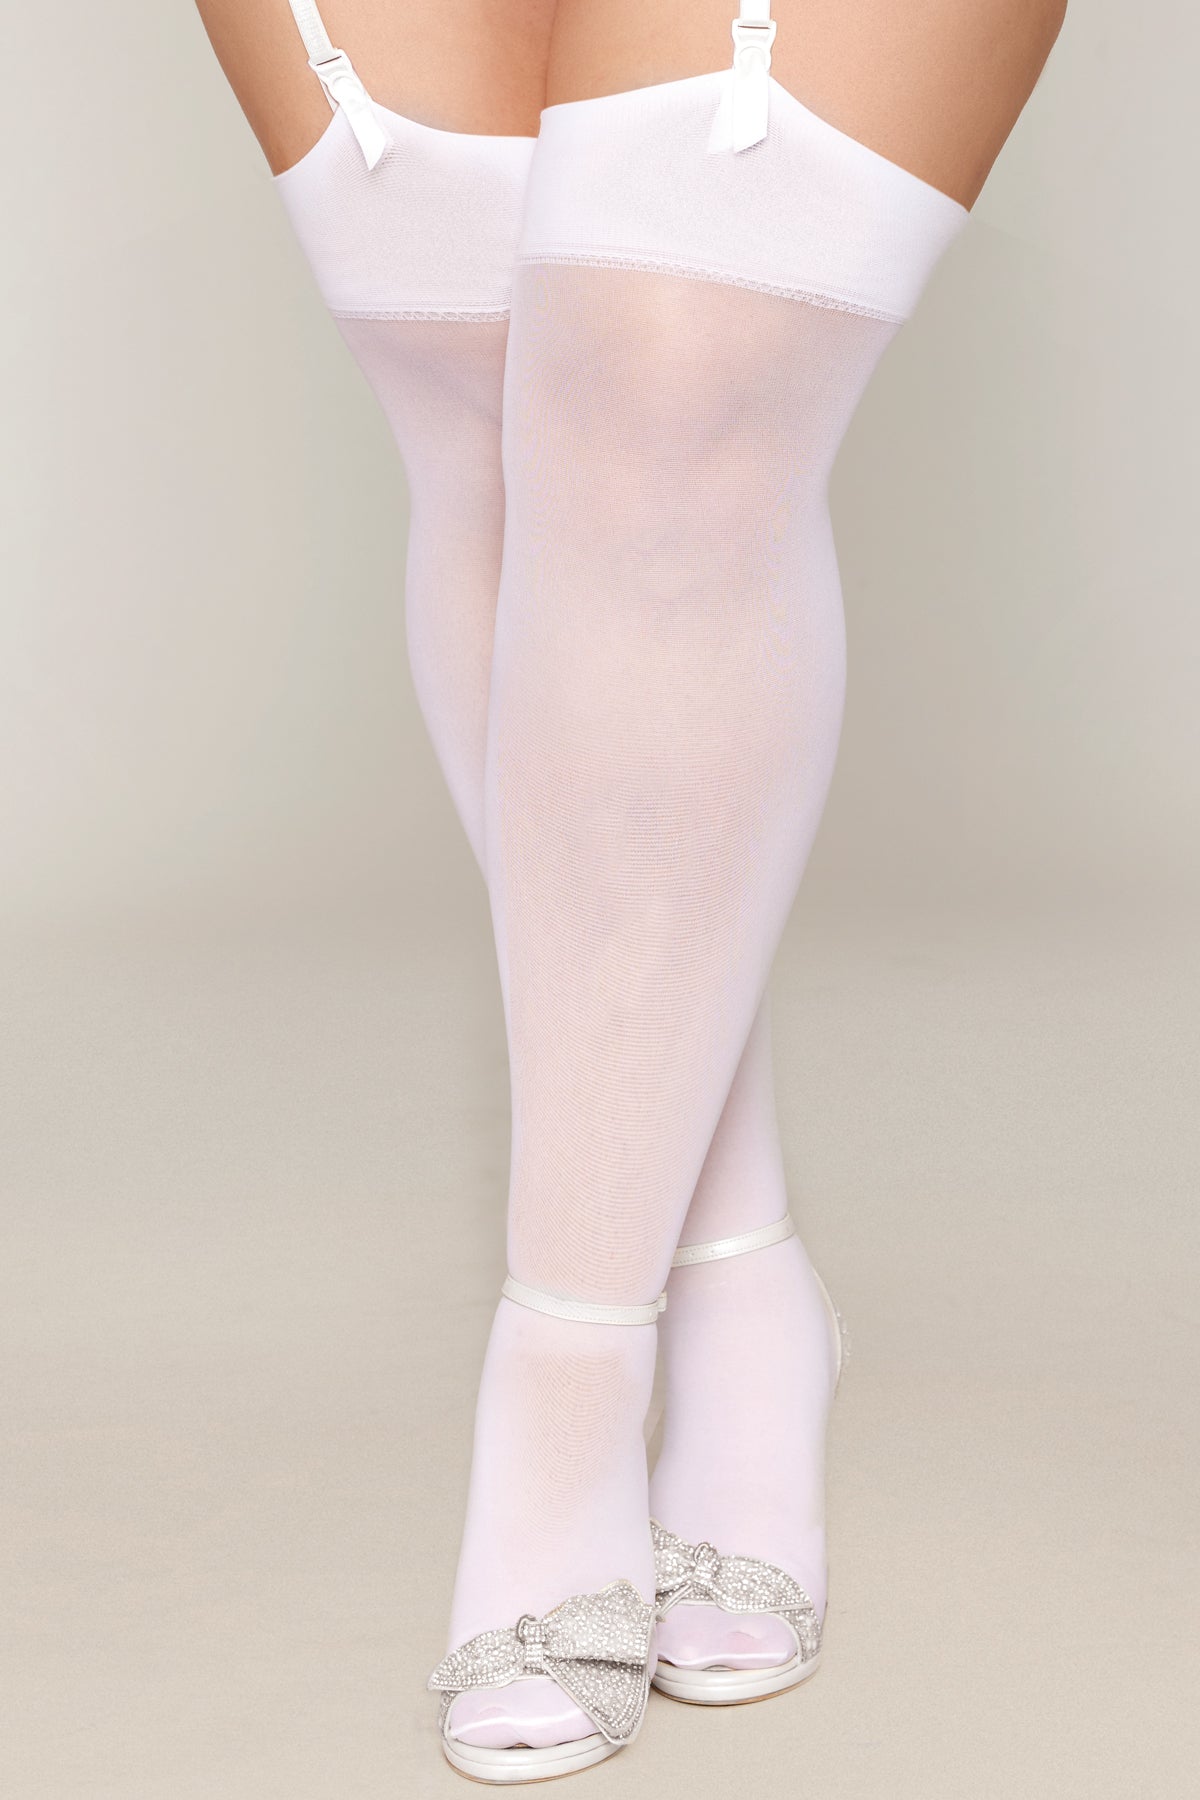 Rhinestone "Bride" Stockings